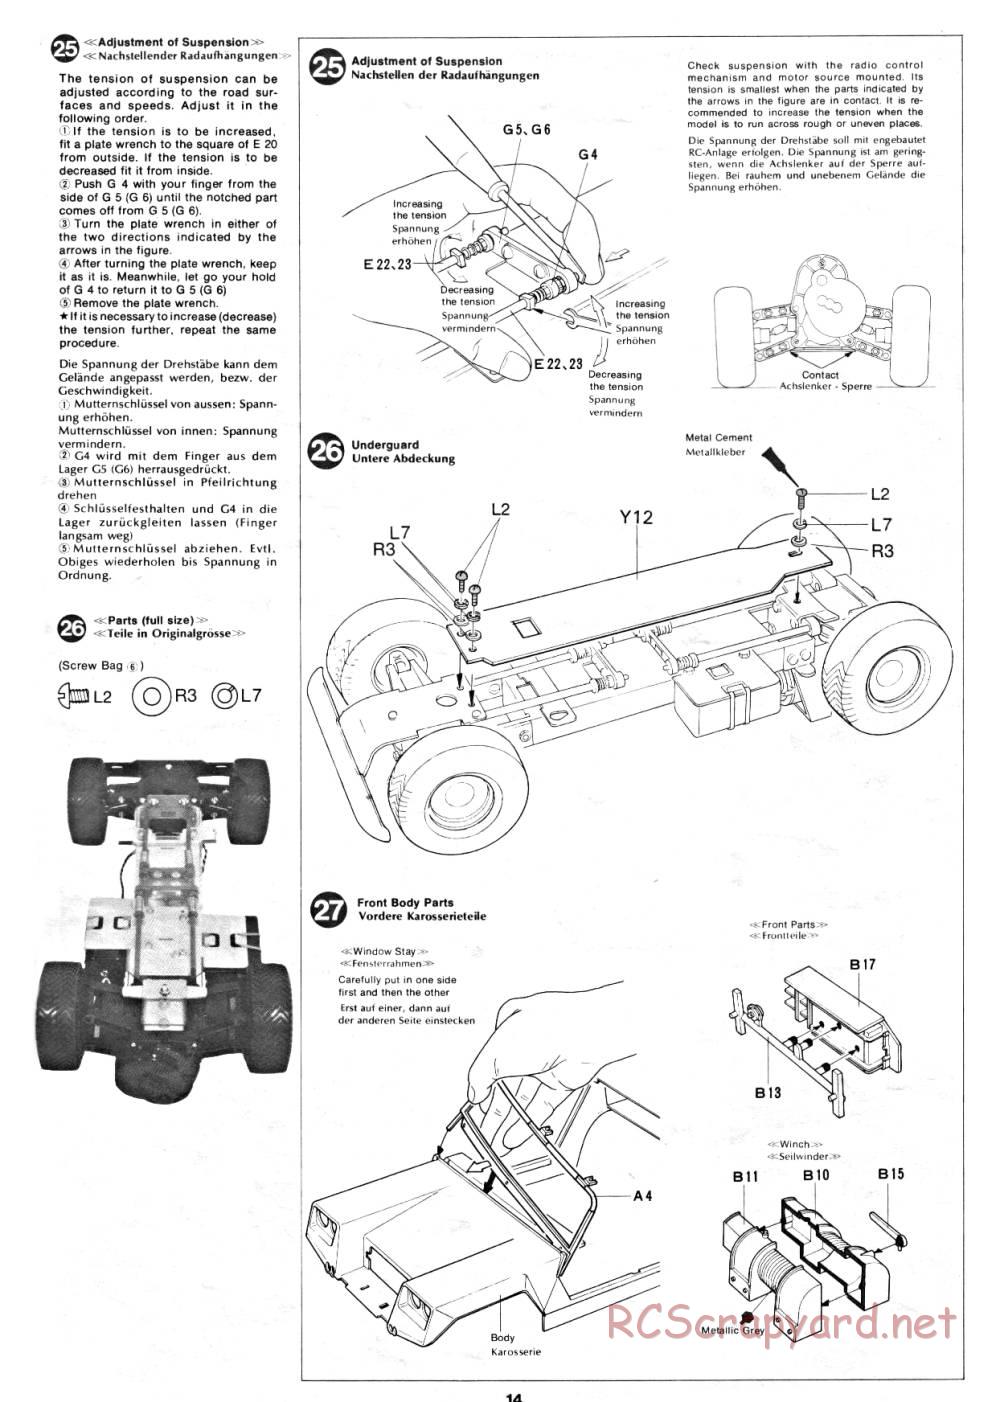 Tamiya - Lamborghini Cheetah - 58007 - Manual - Page 14